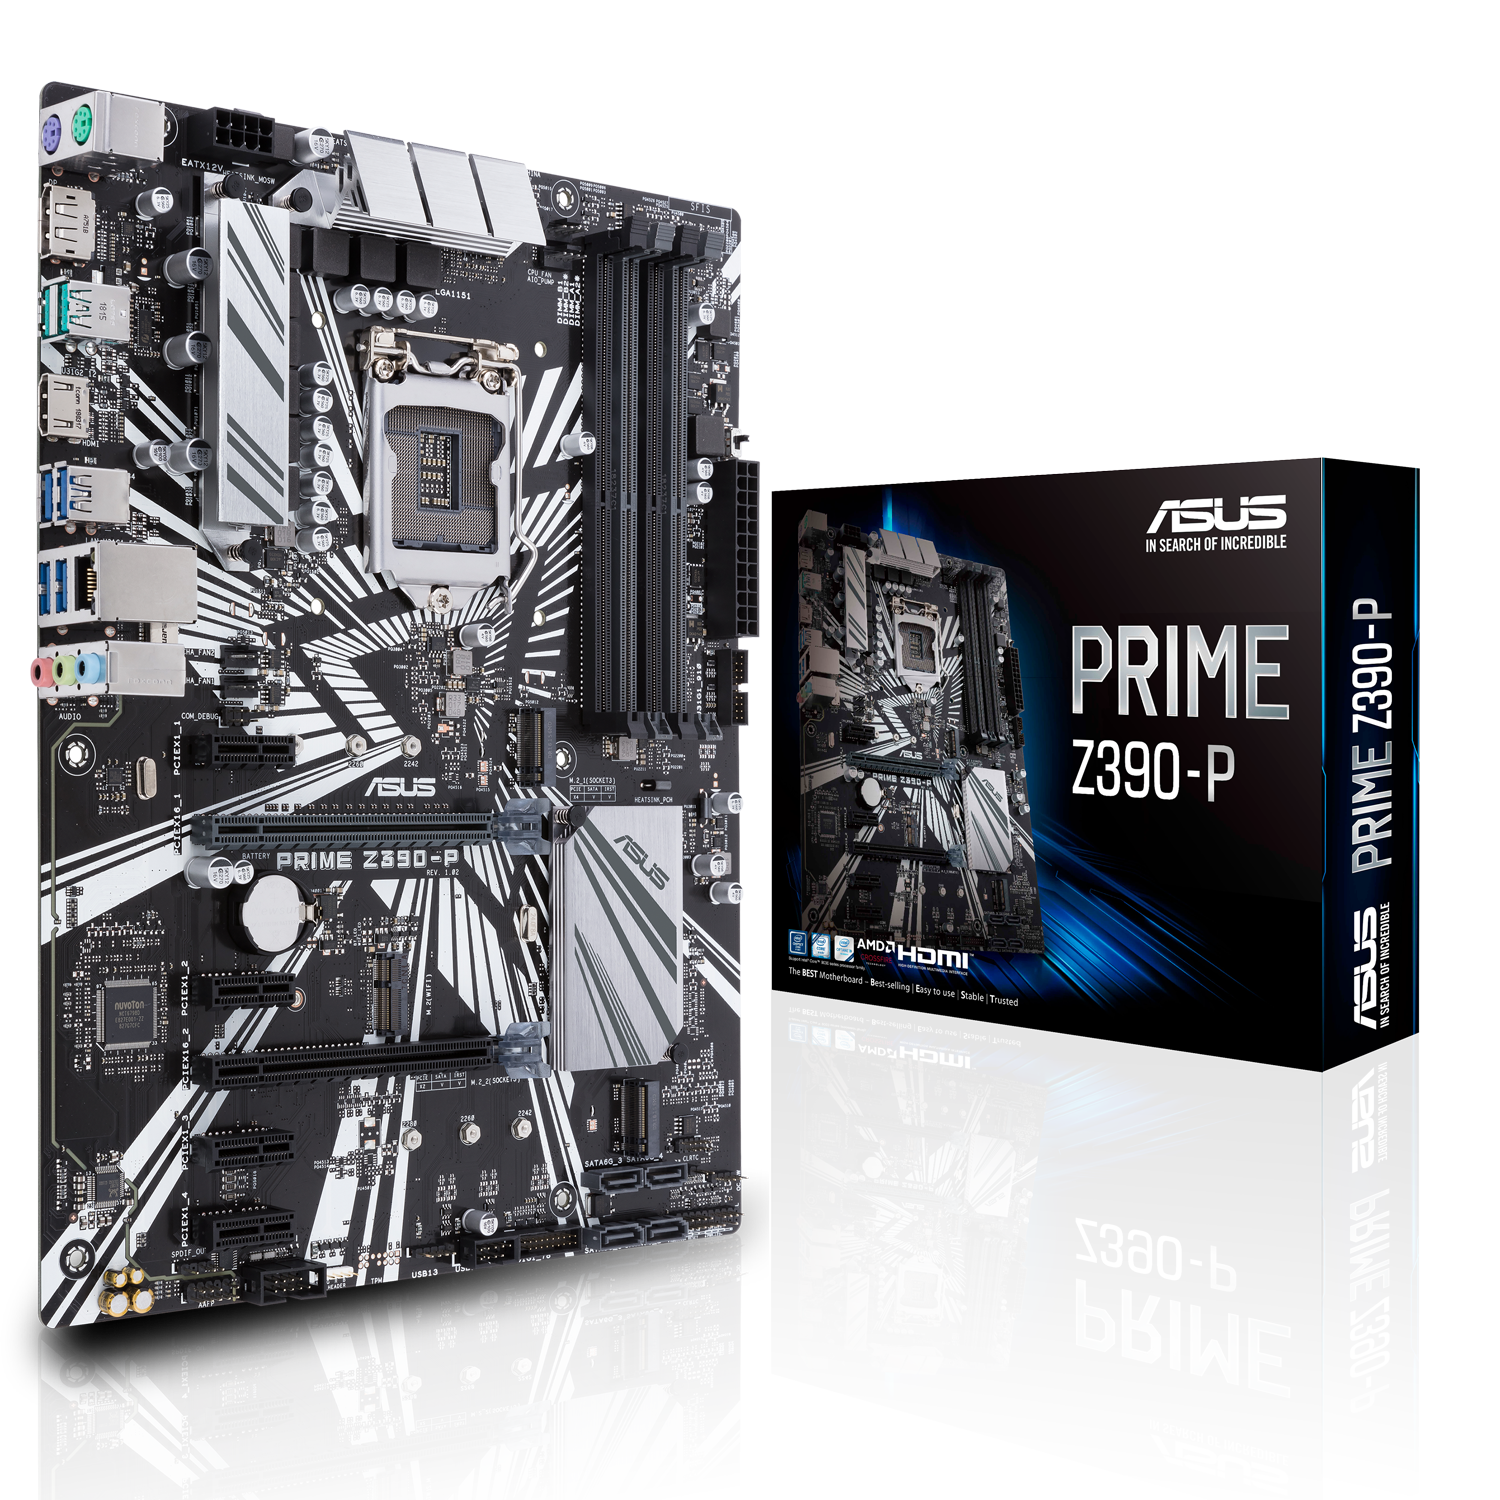 Asus - Asus Prime Z390-P Intel Z390 (Socket 1151) DDR4 ATX Motherboard